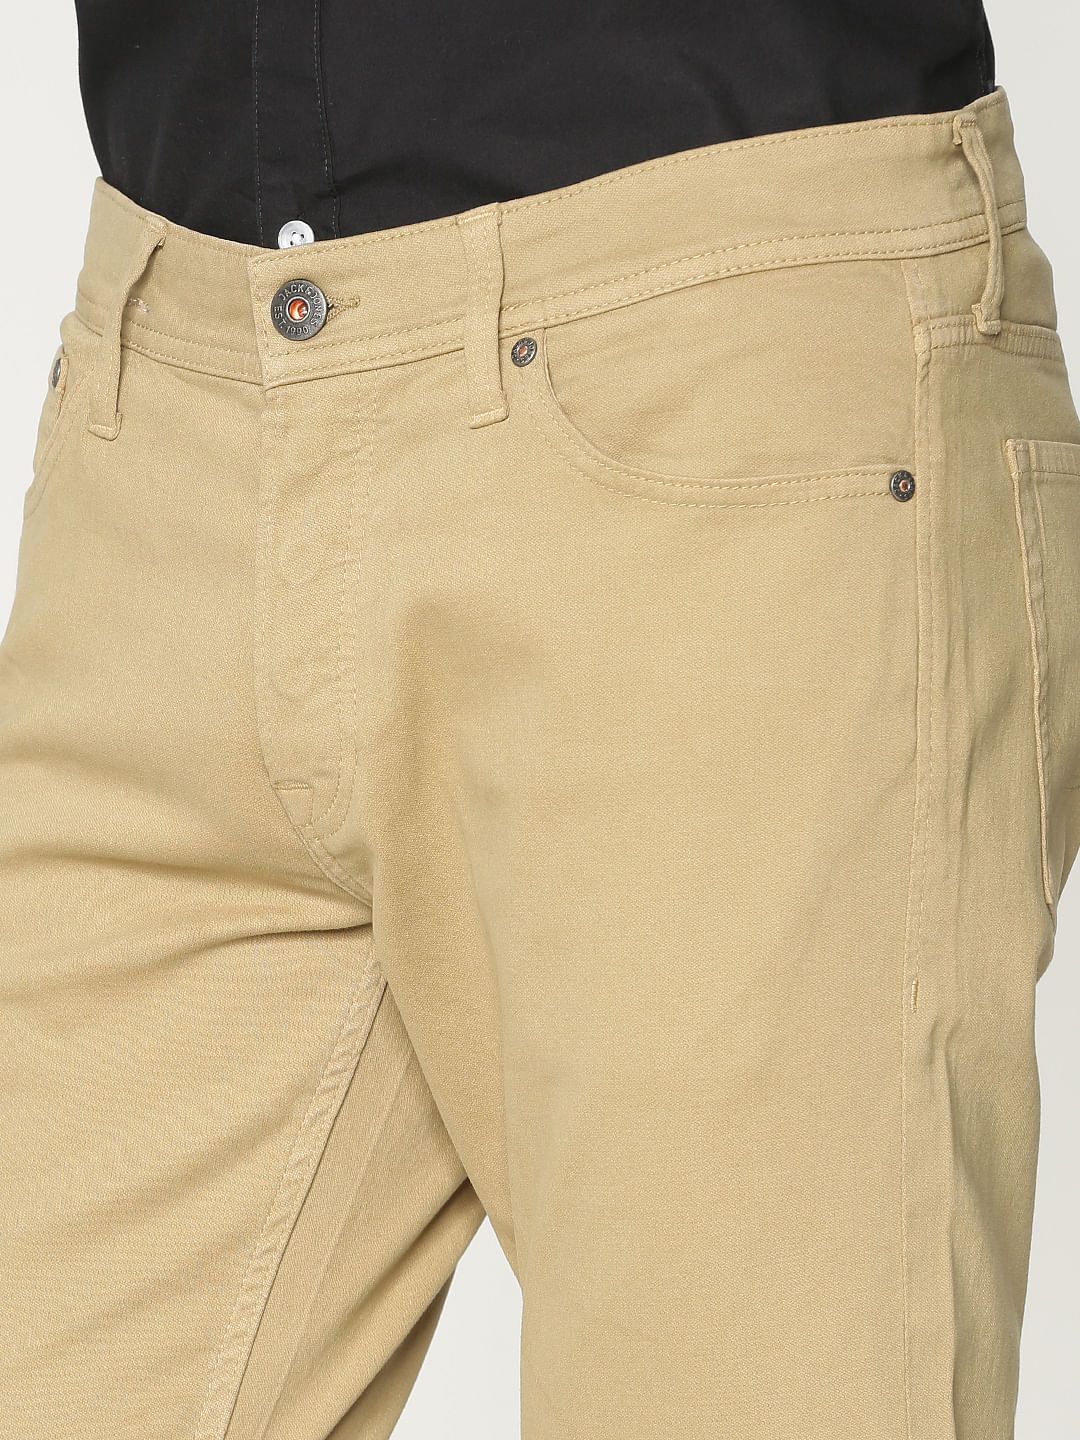 KMK slacks discount 99% slim Brown 42                  EU MEN FASHION Trousers Skinny 